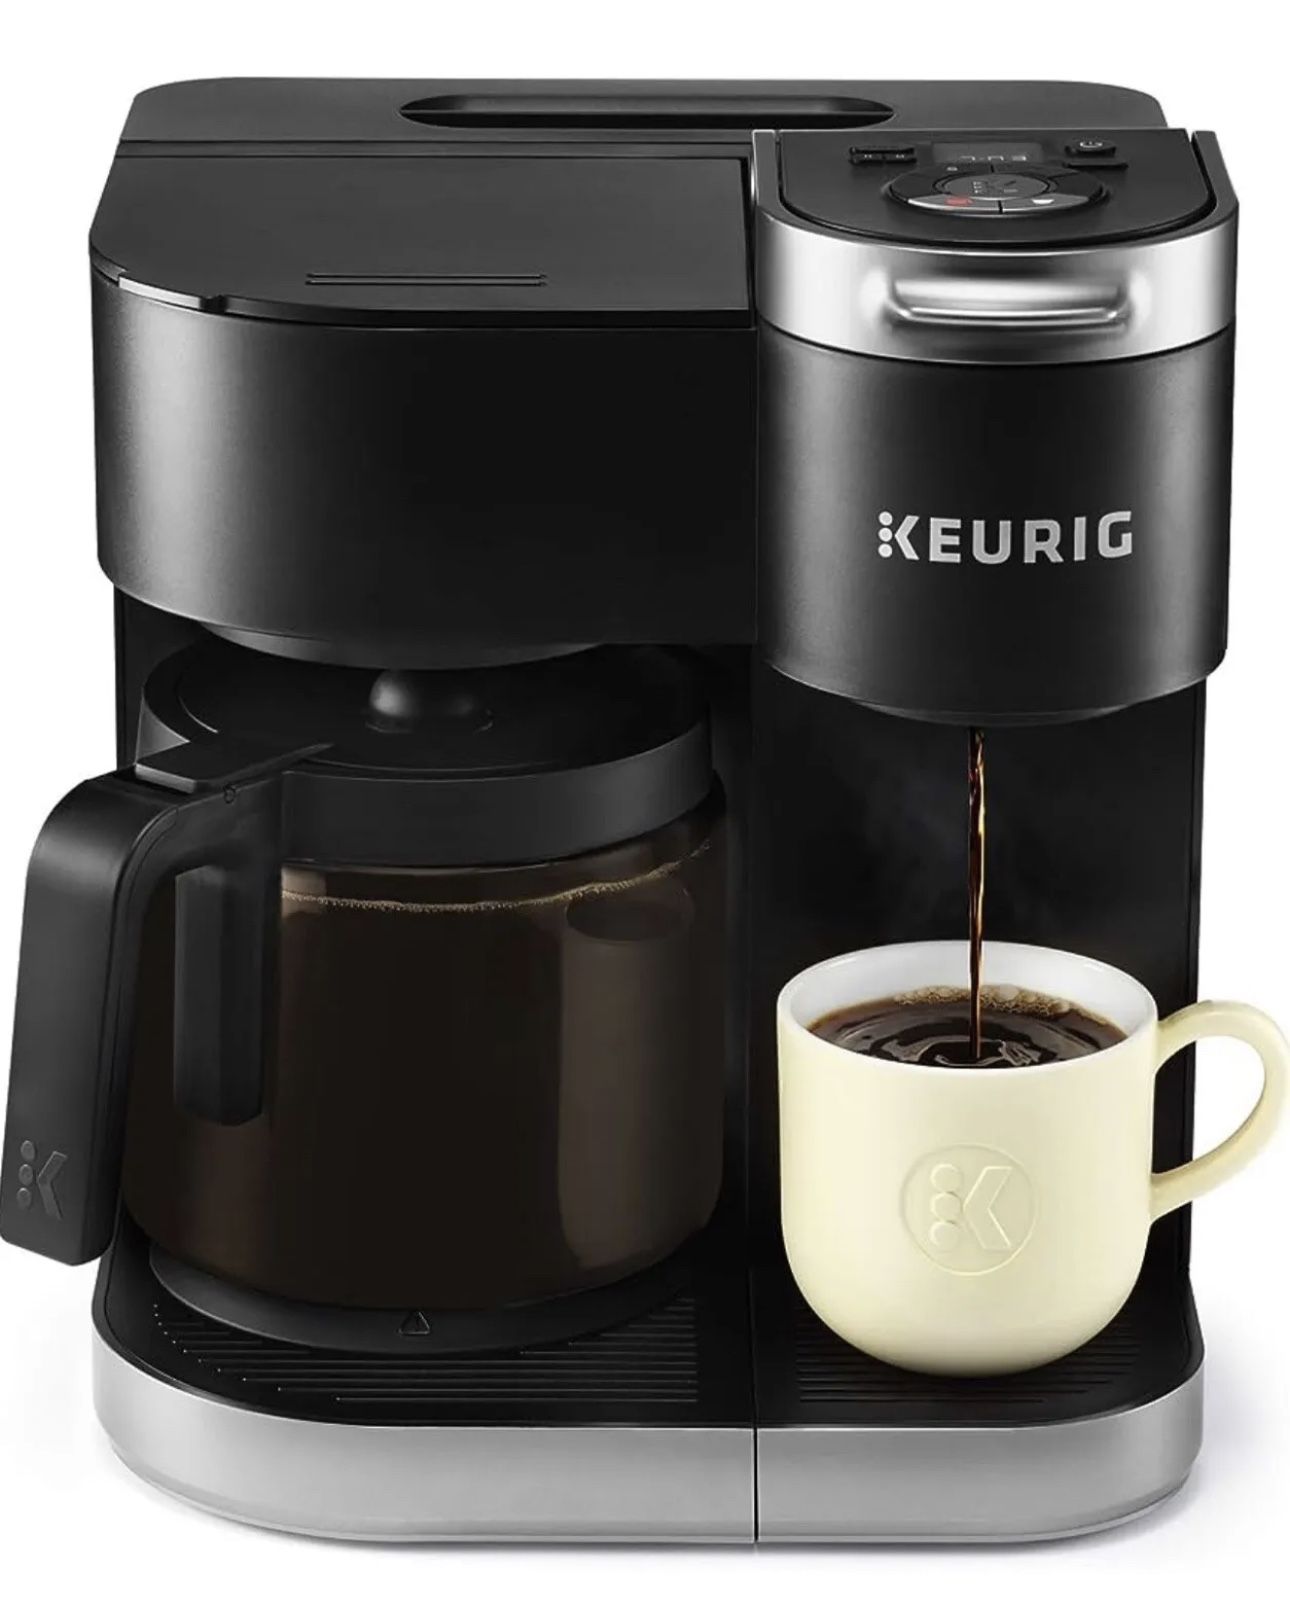 BRAND NEW Keurig K-Duo Single Serve K-Cup Pod & Carafe Coffee Maker, Black